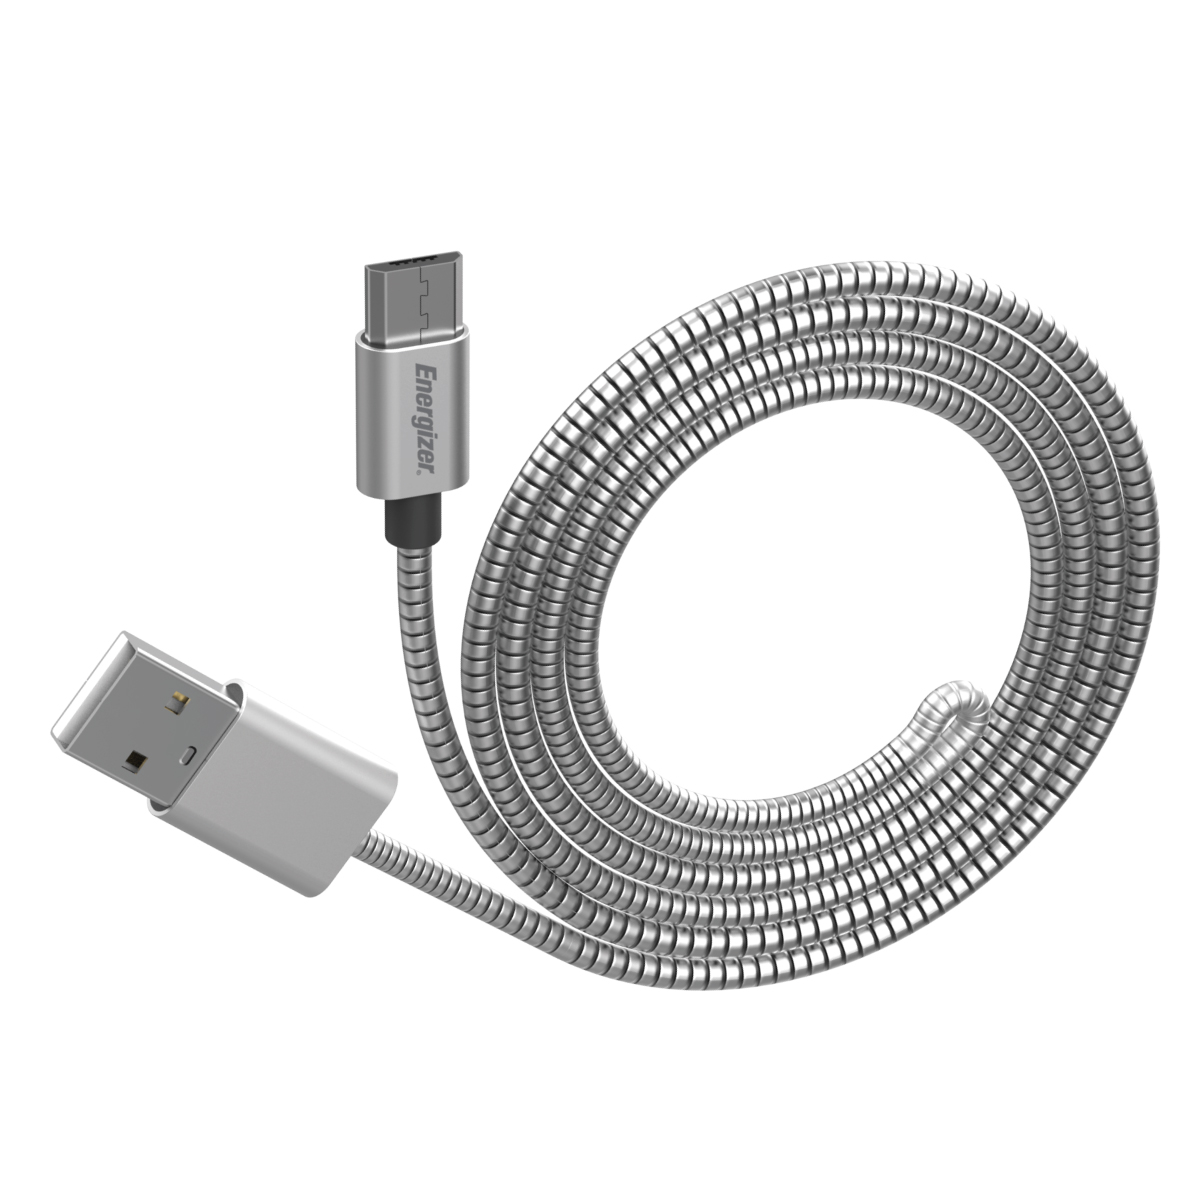 EU Micro USB Cable 4ft SL